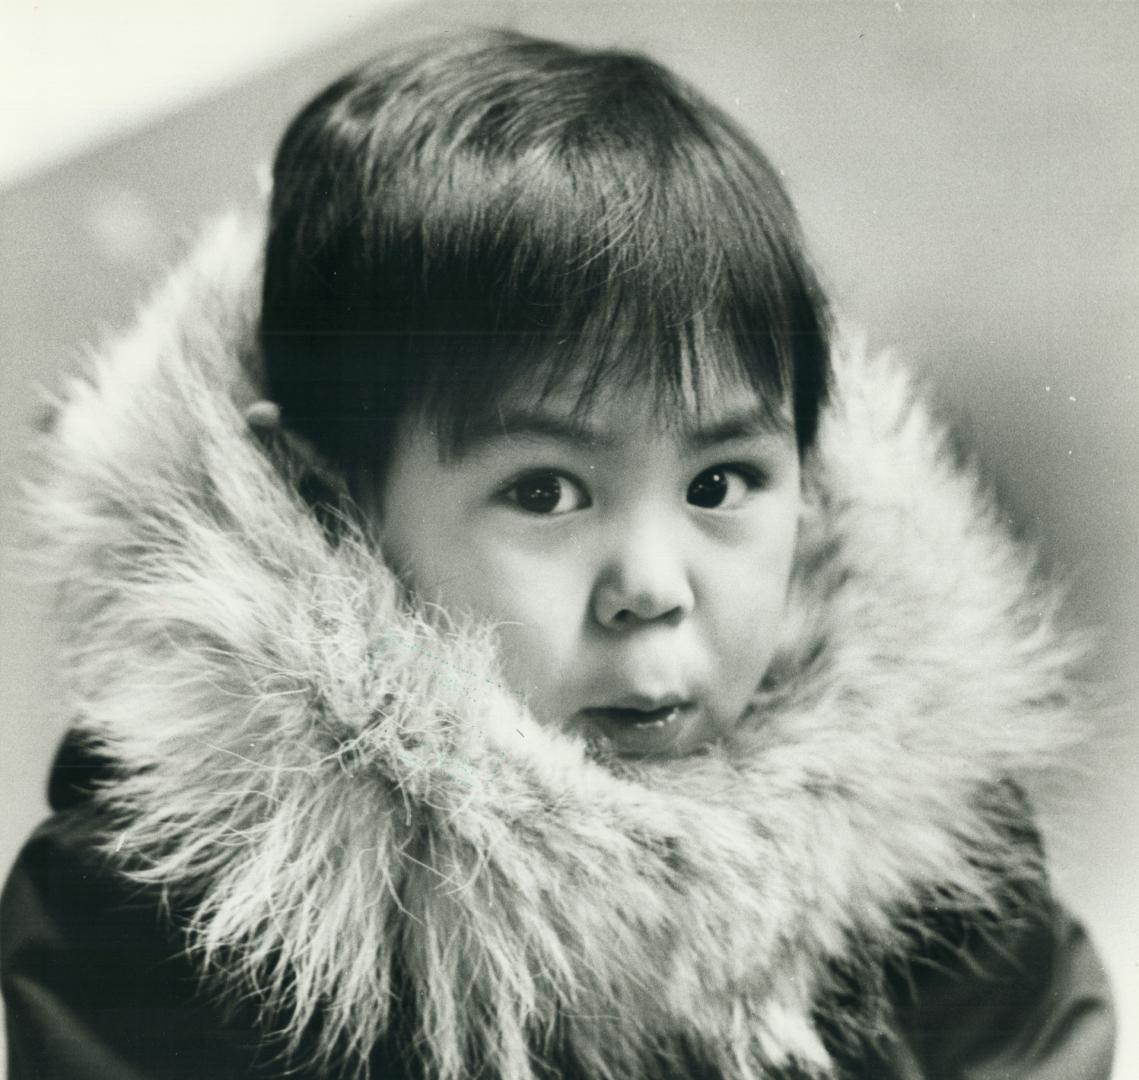 Little Eskimo, Christopher Kilabuk, 1 year old